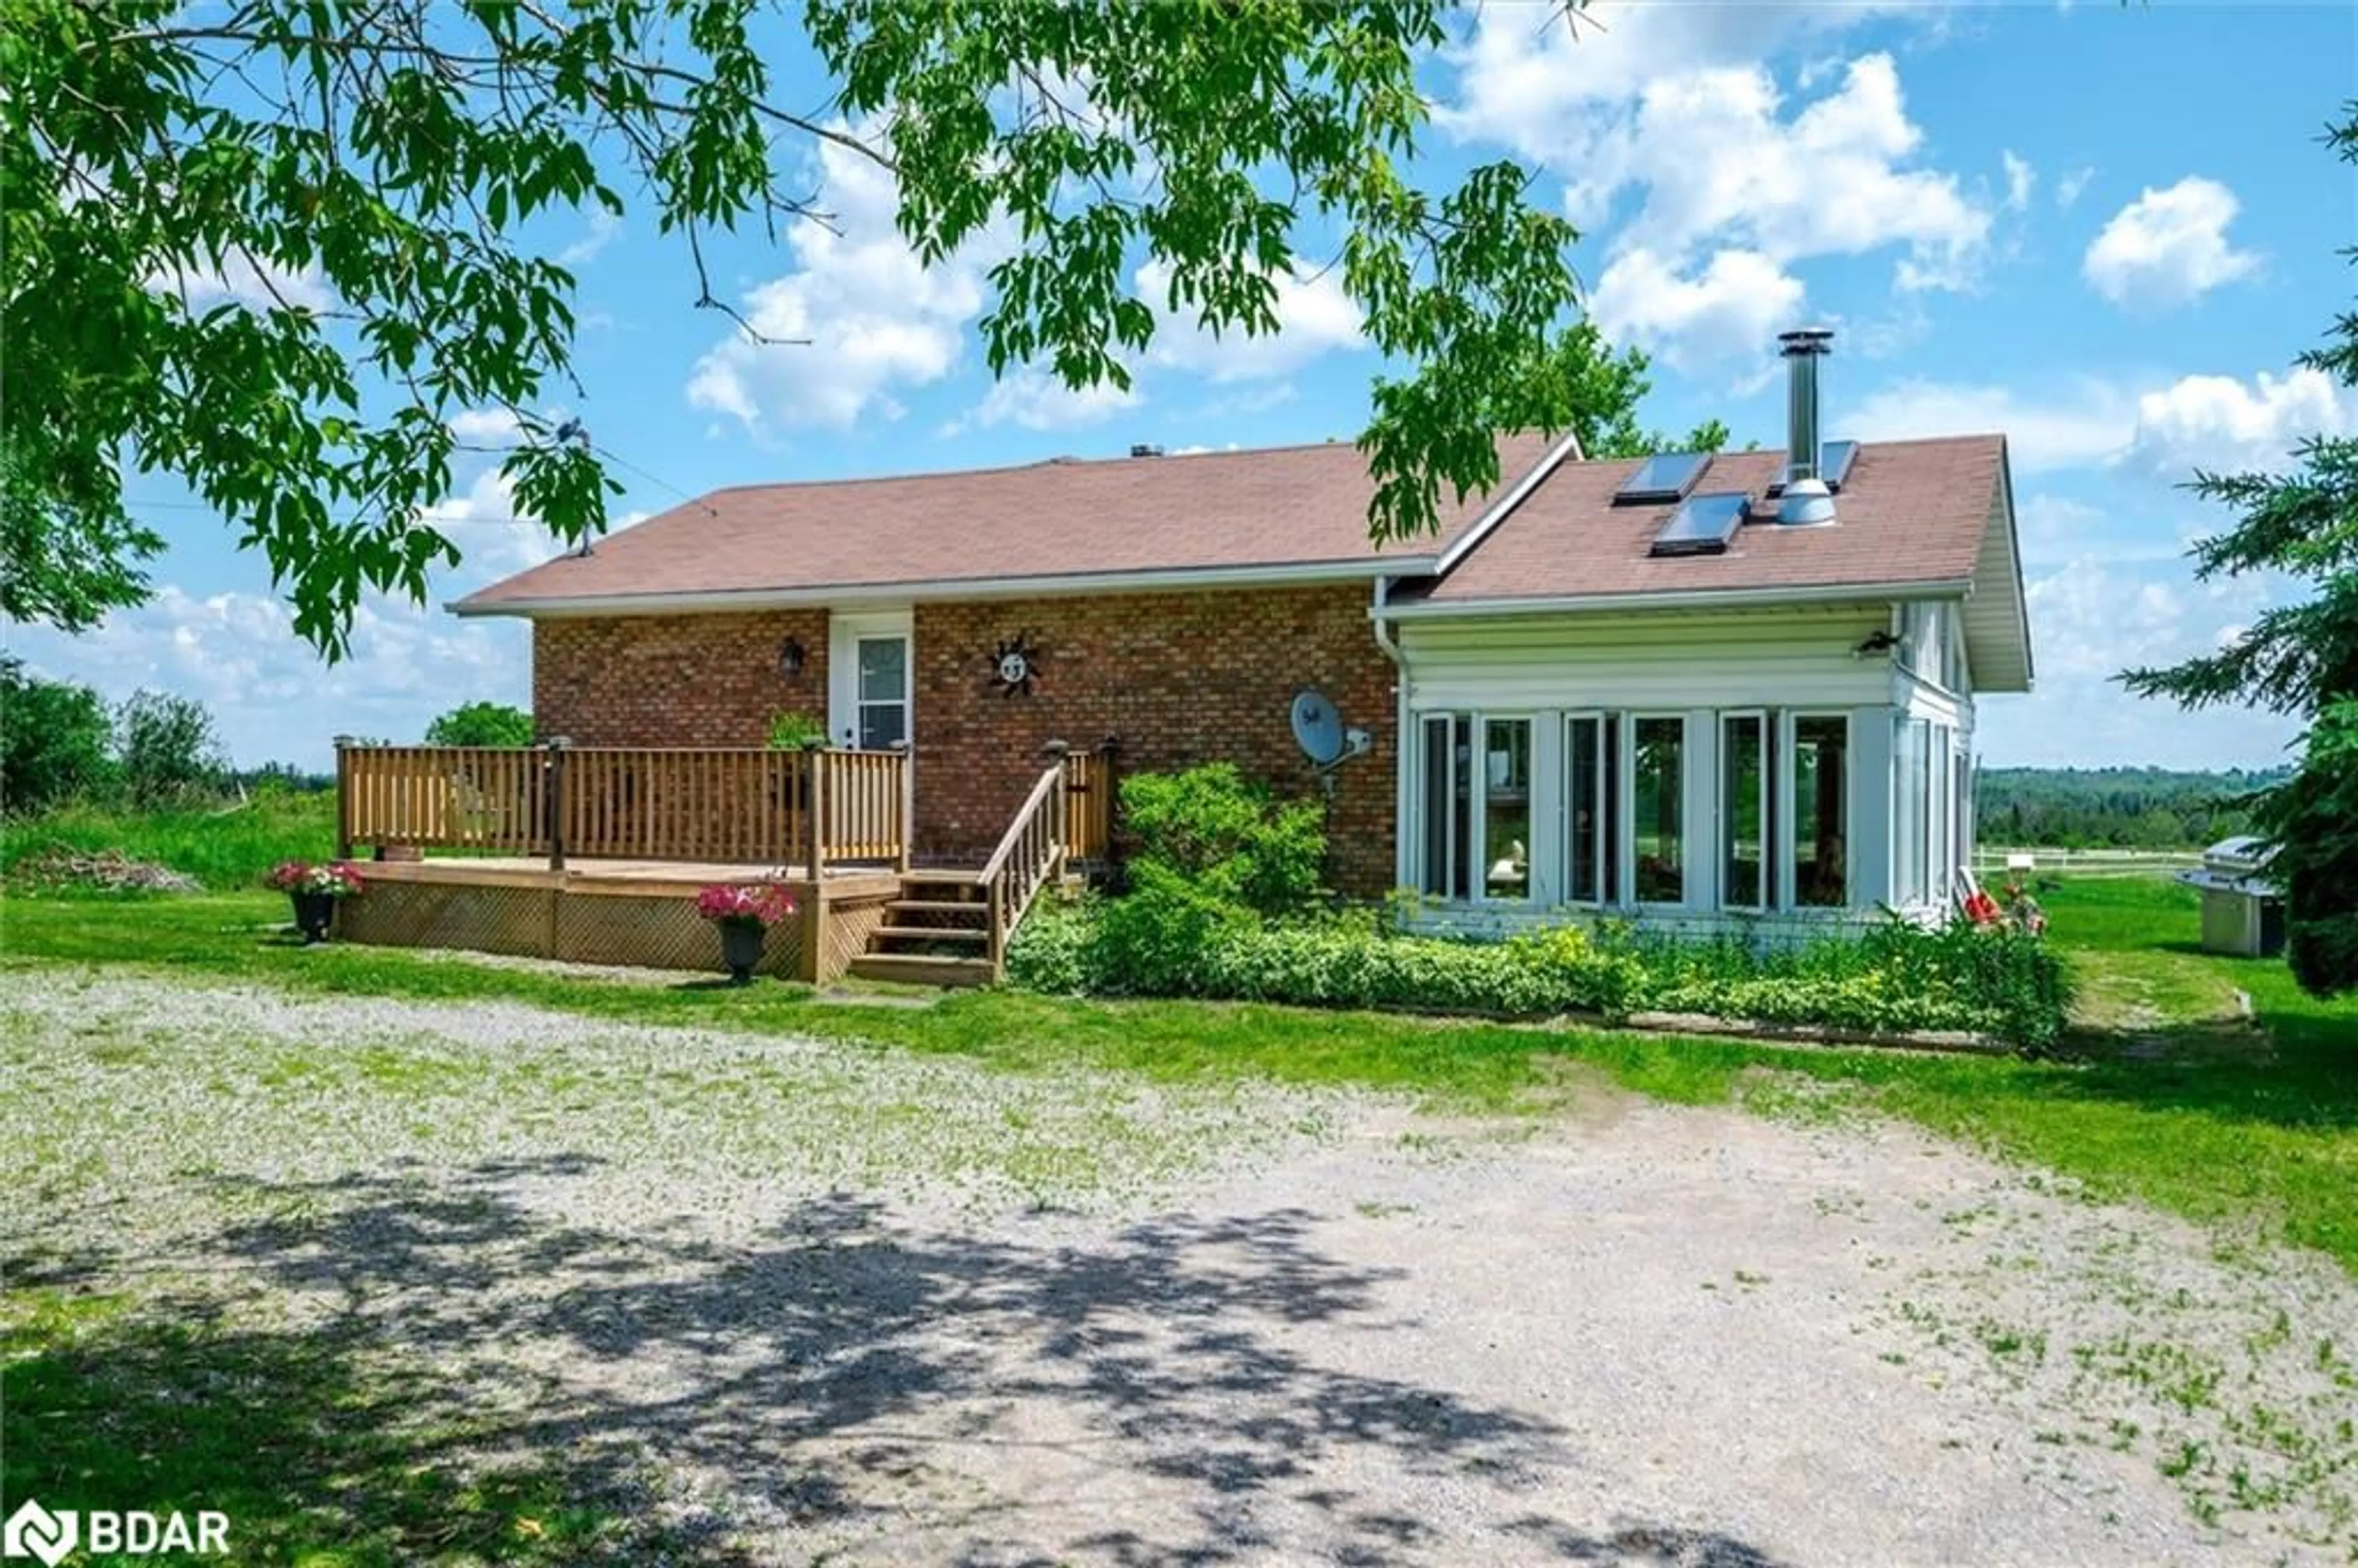 Home with brick exterior material for 506 Cedar Glen Rd, Dunsford Ontario K0M 1L0